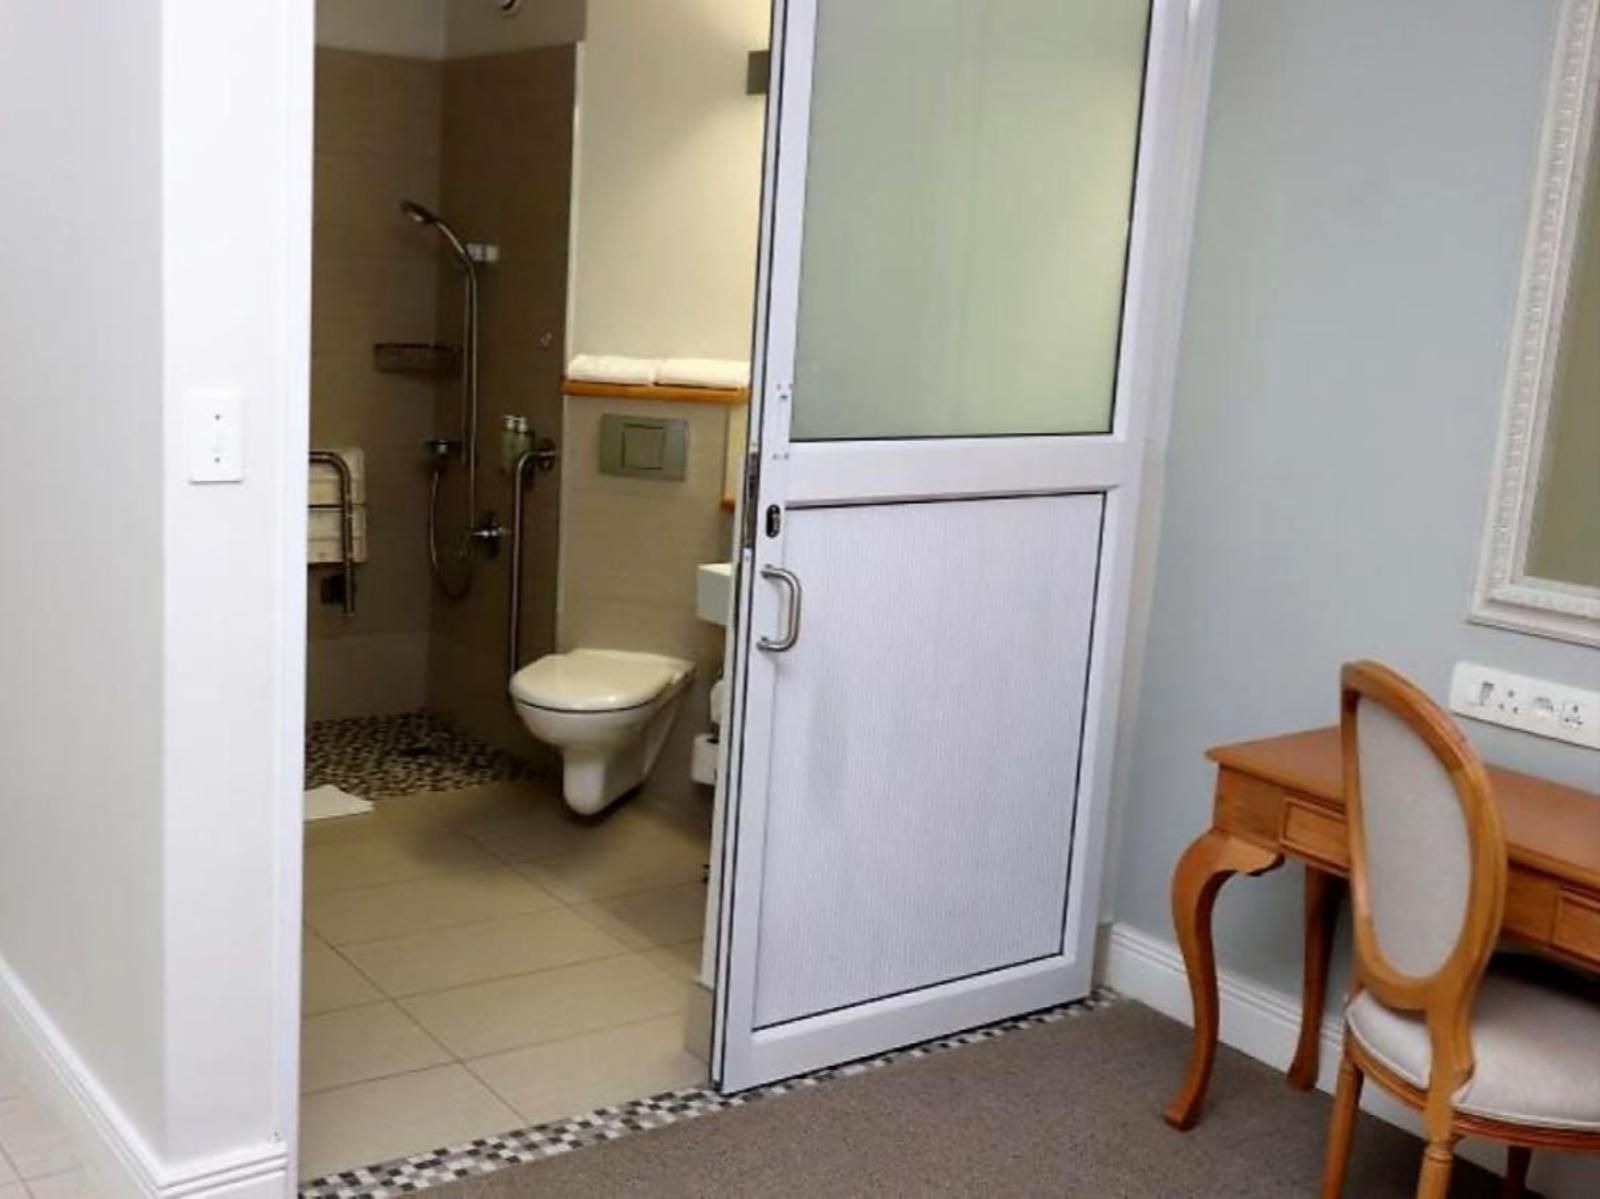 Riverside Hotel Prospect Hall Durban Kwazulu Natal South Africa Bathroom